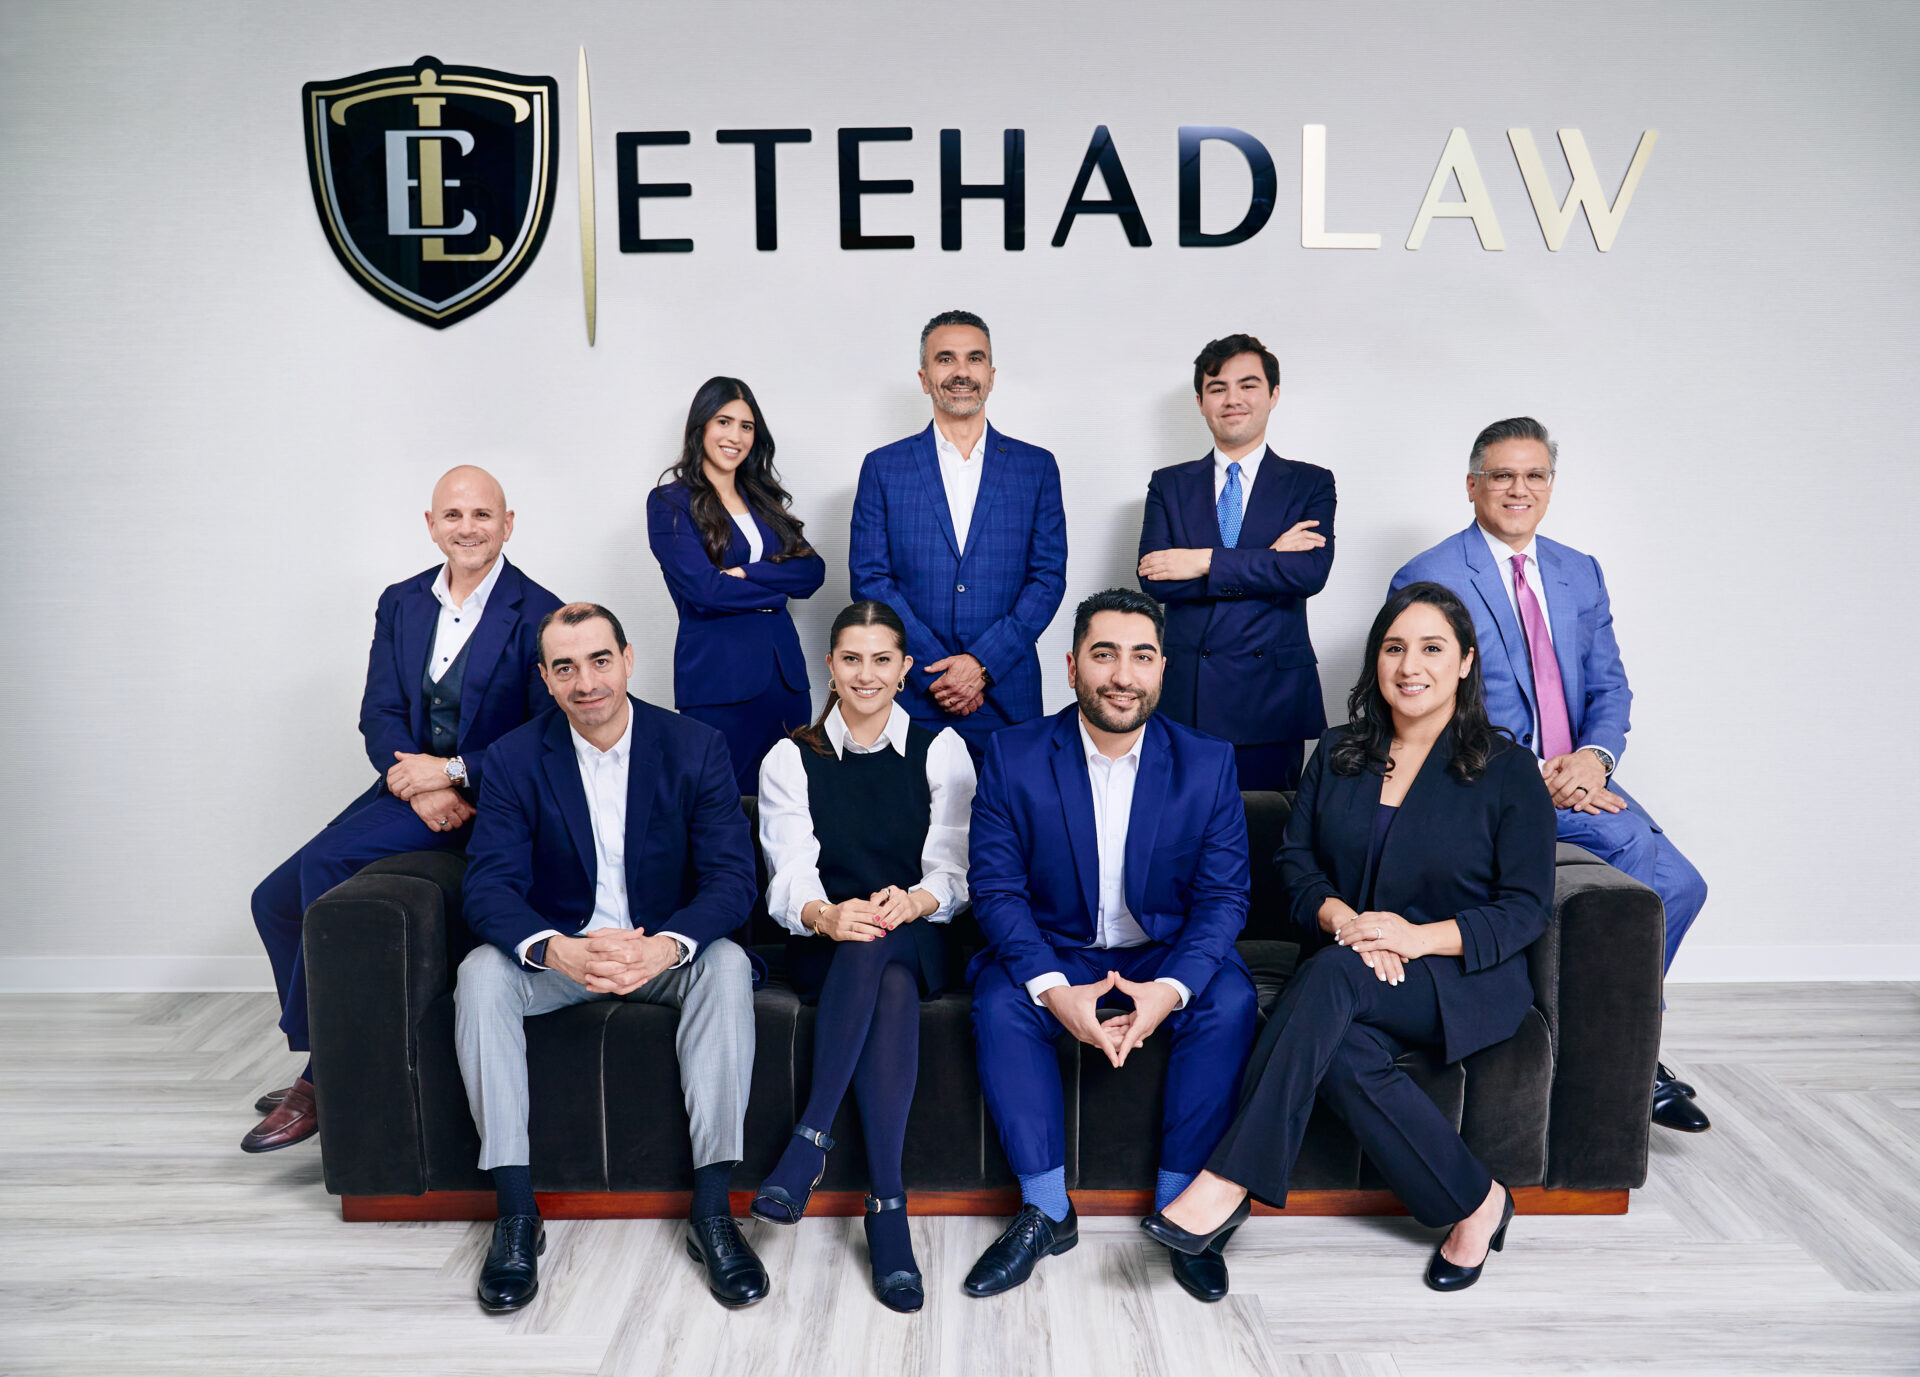 etehad law firm team members